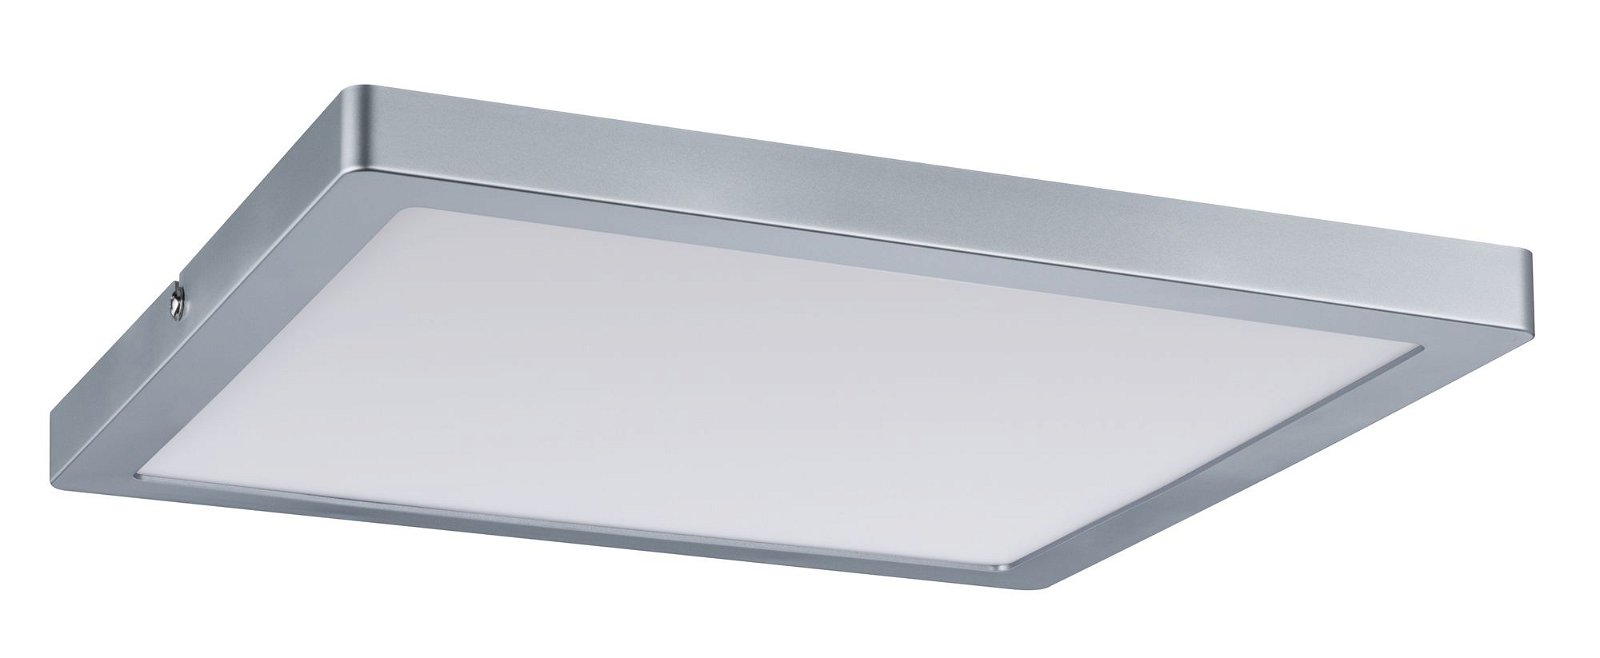 LED Panel Atria square 300x300mm 16,5W 1450lm 2700K Chrome matt dimmable